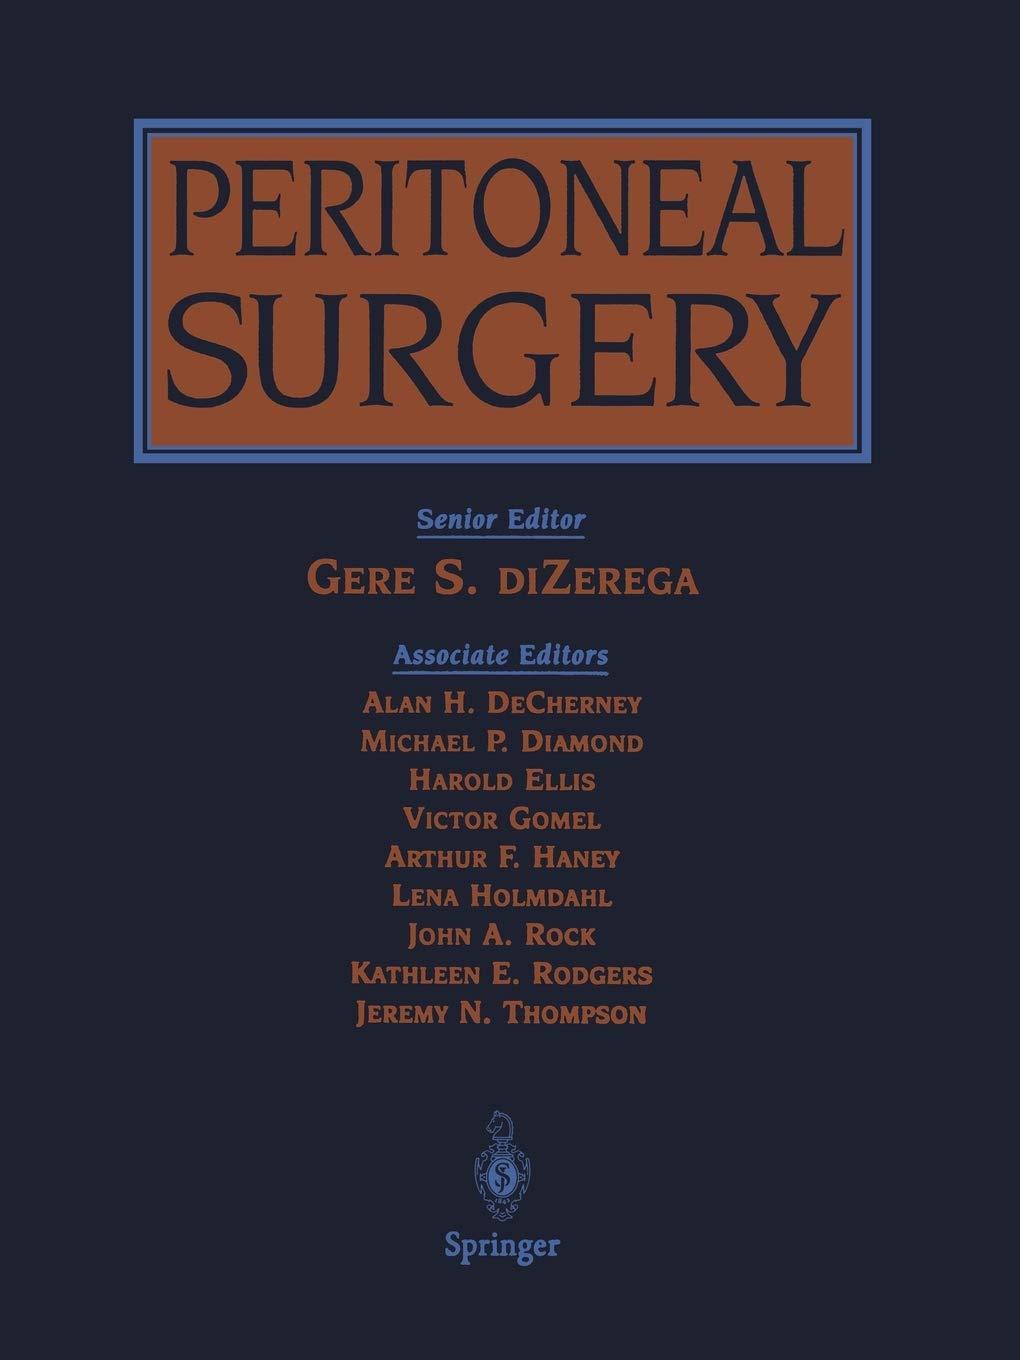 peritoneal surgery 2000 edition gere s. dizerega 1461270405, 978-1461270409